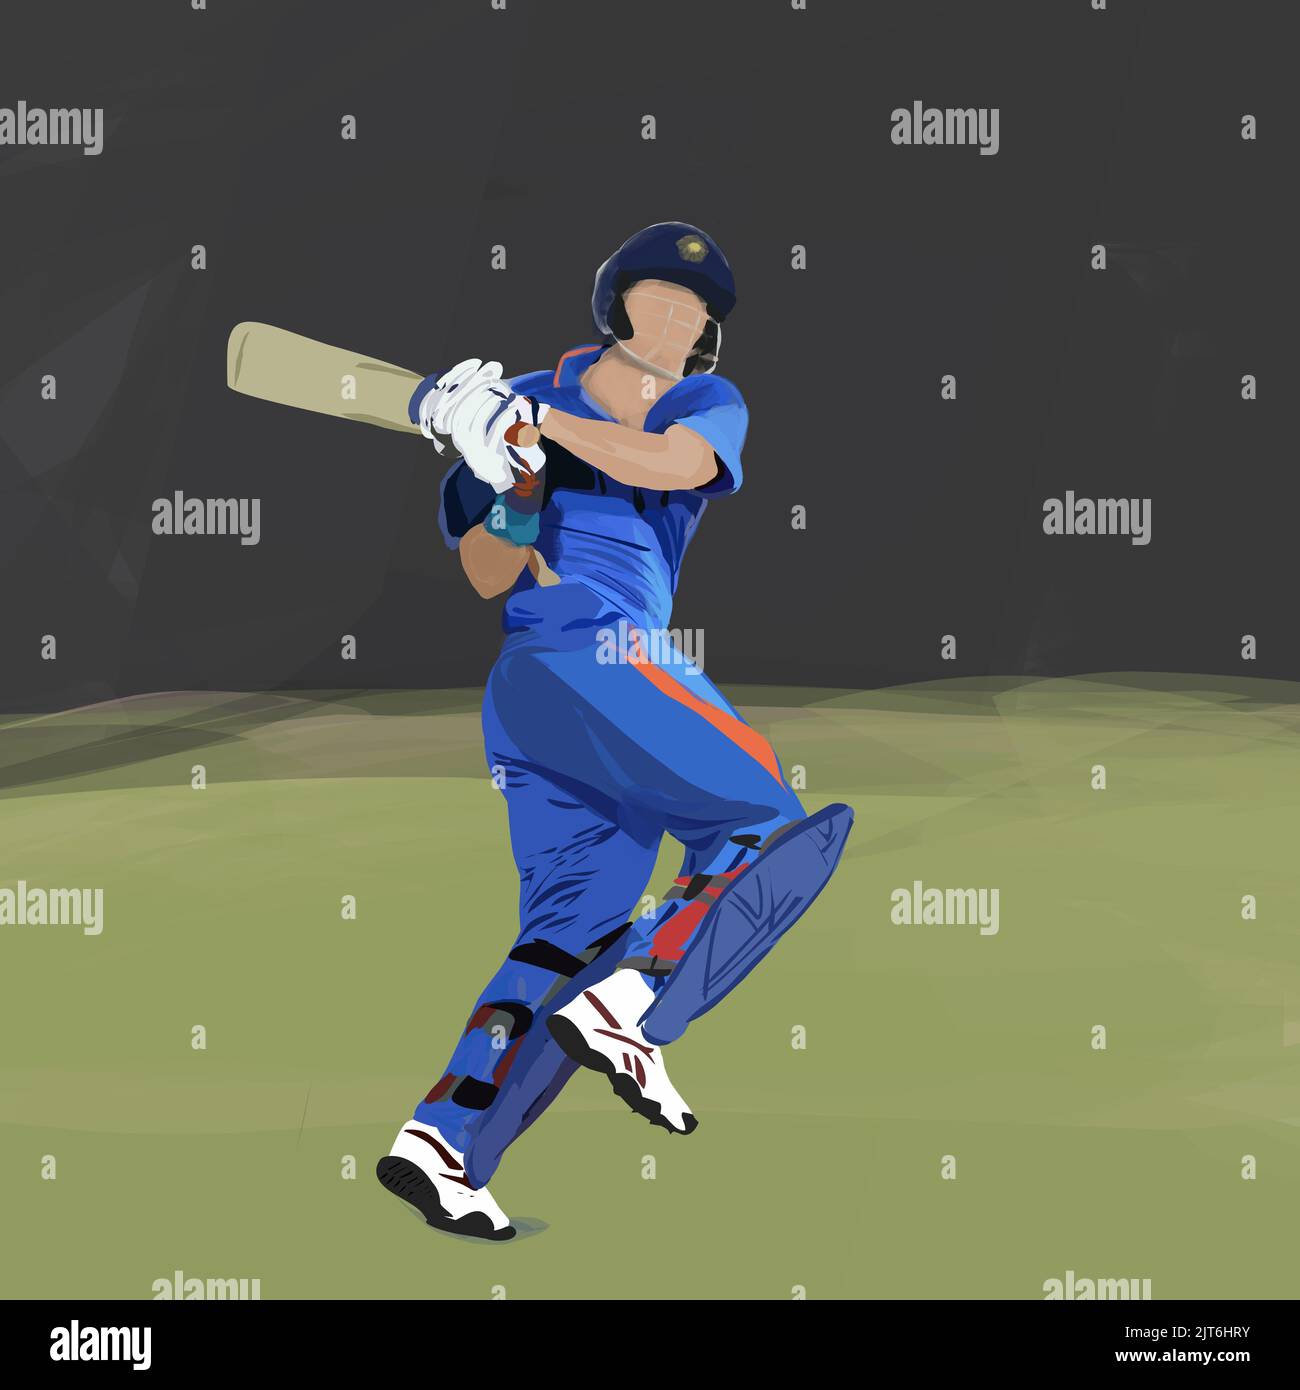 Indian Cricket player Yuvraj Singh Drawing picture illustration download.Indian cricket player vector illustration download. Stock Photo